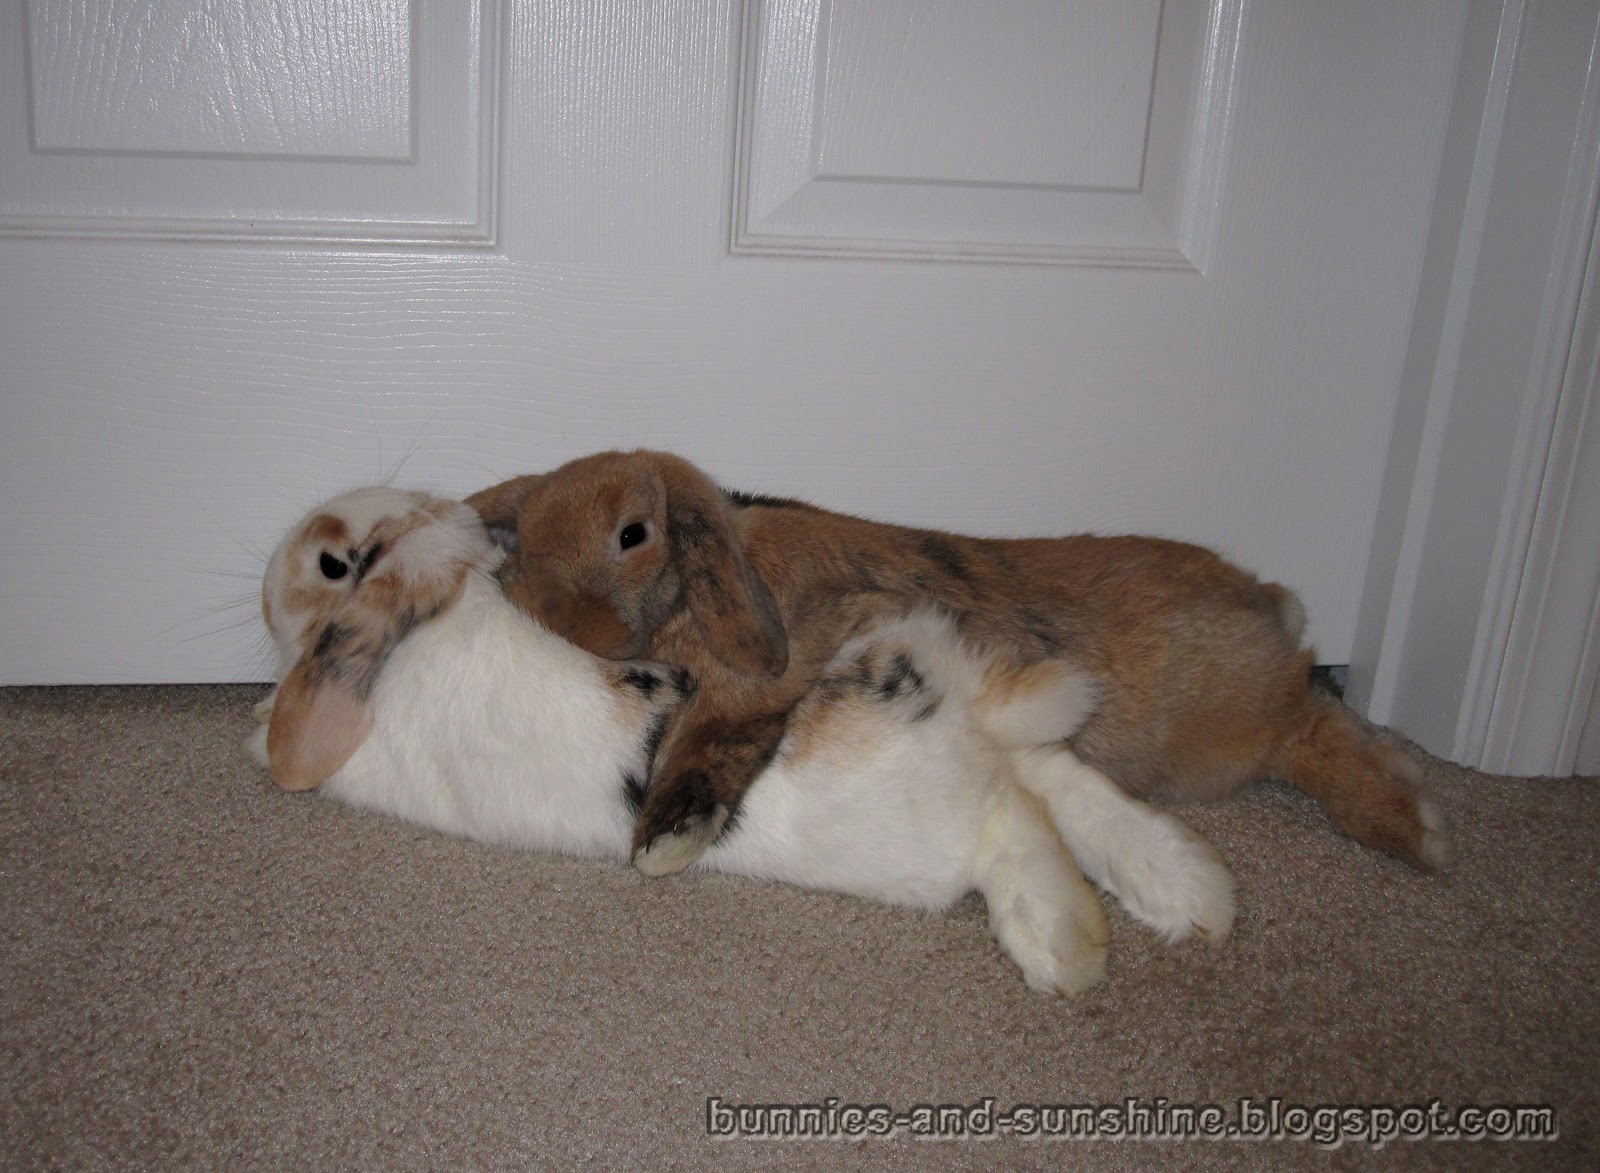 Bunnies and Sunshine: Sleepy bunny hug.